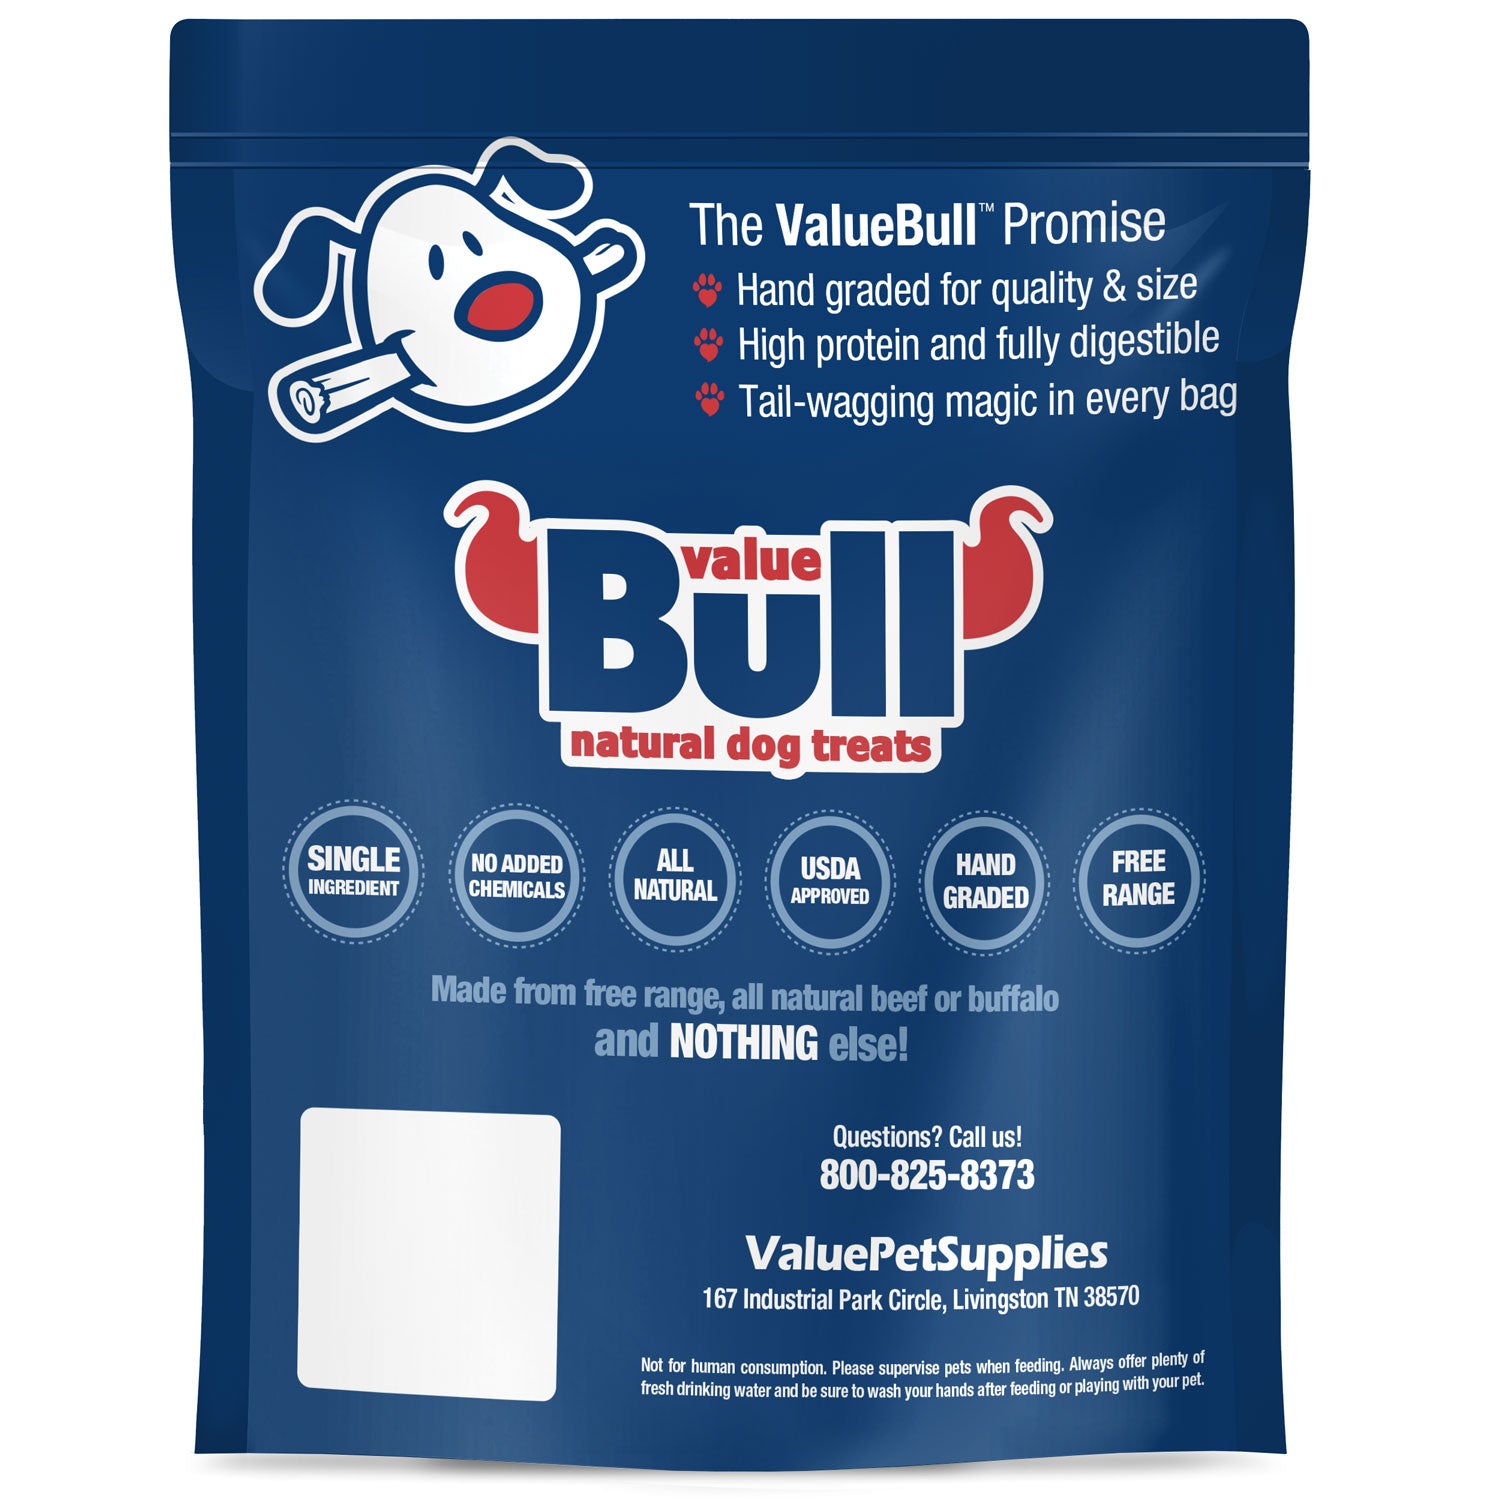 ValueBull Bully Sticks, Low Odor Premium Dog Chews, Thin 12", 100 ct